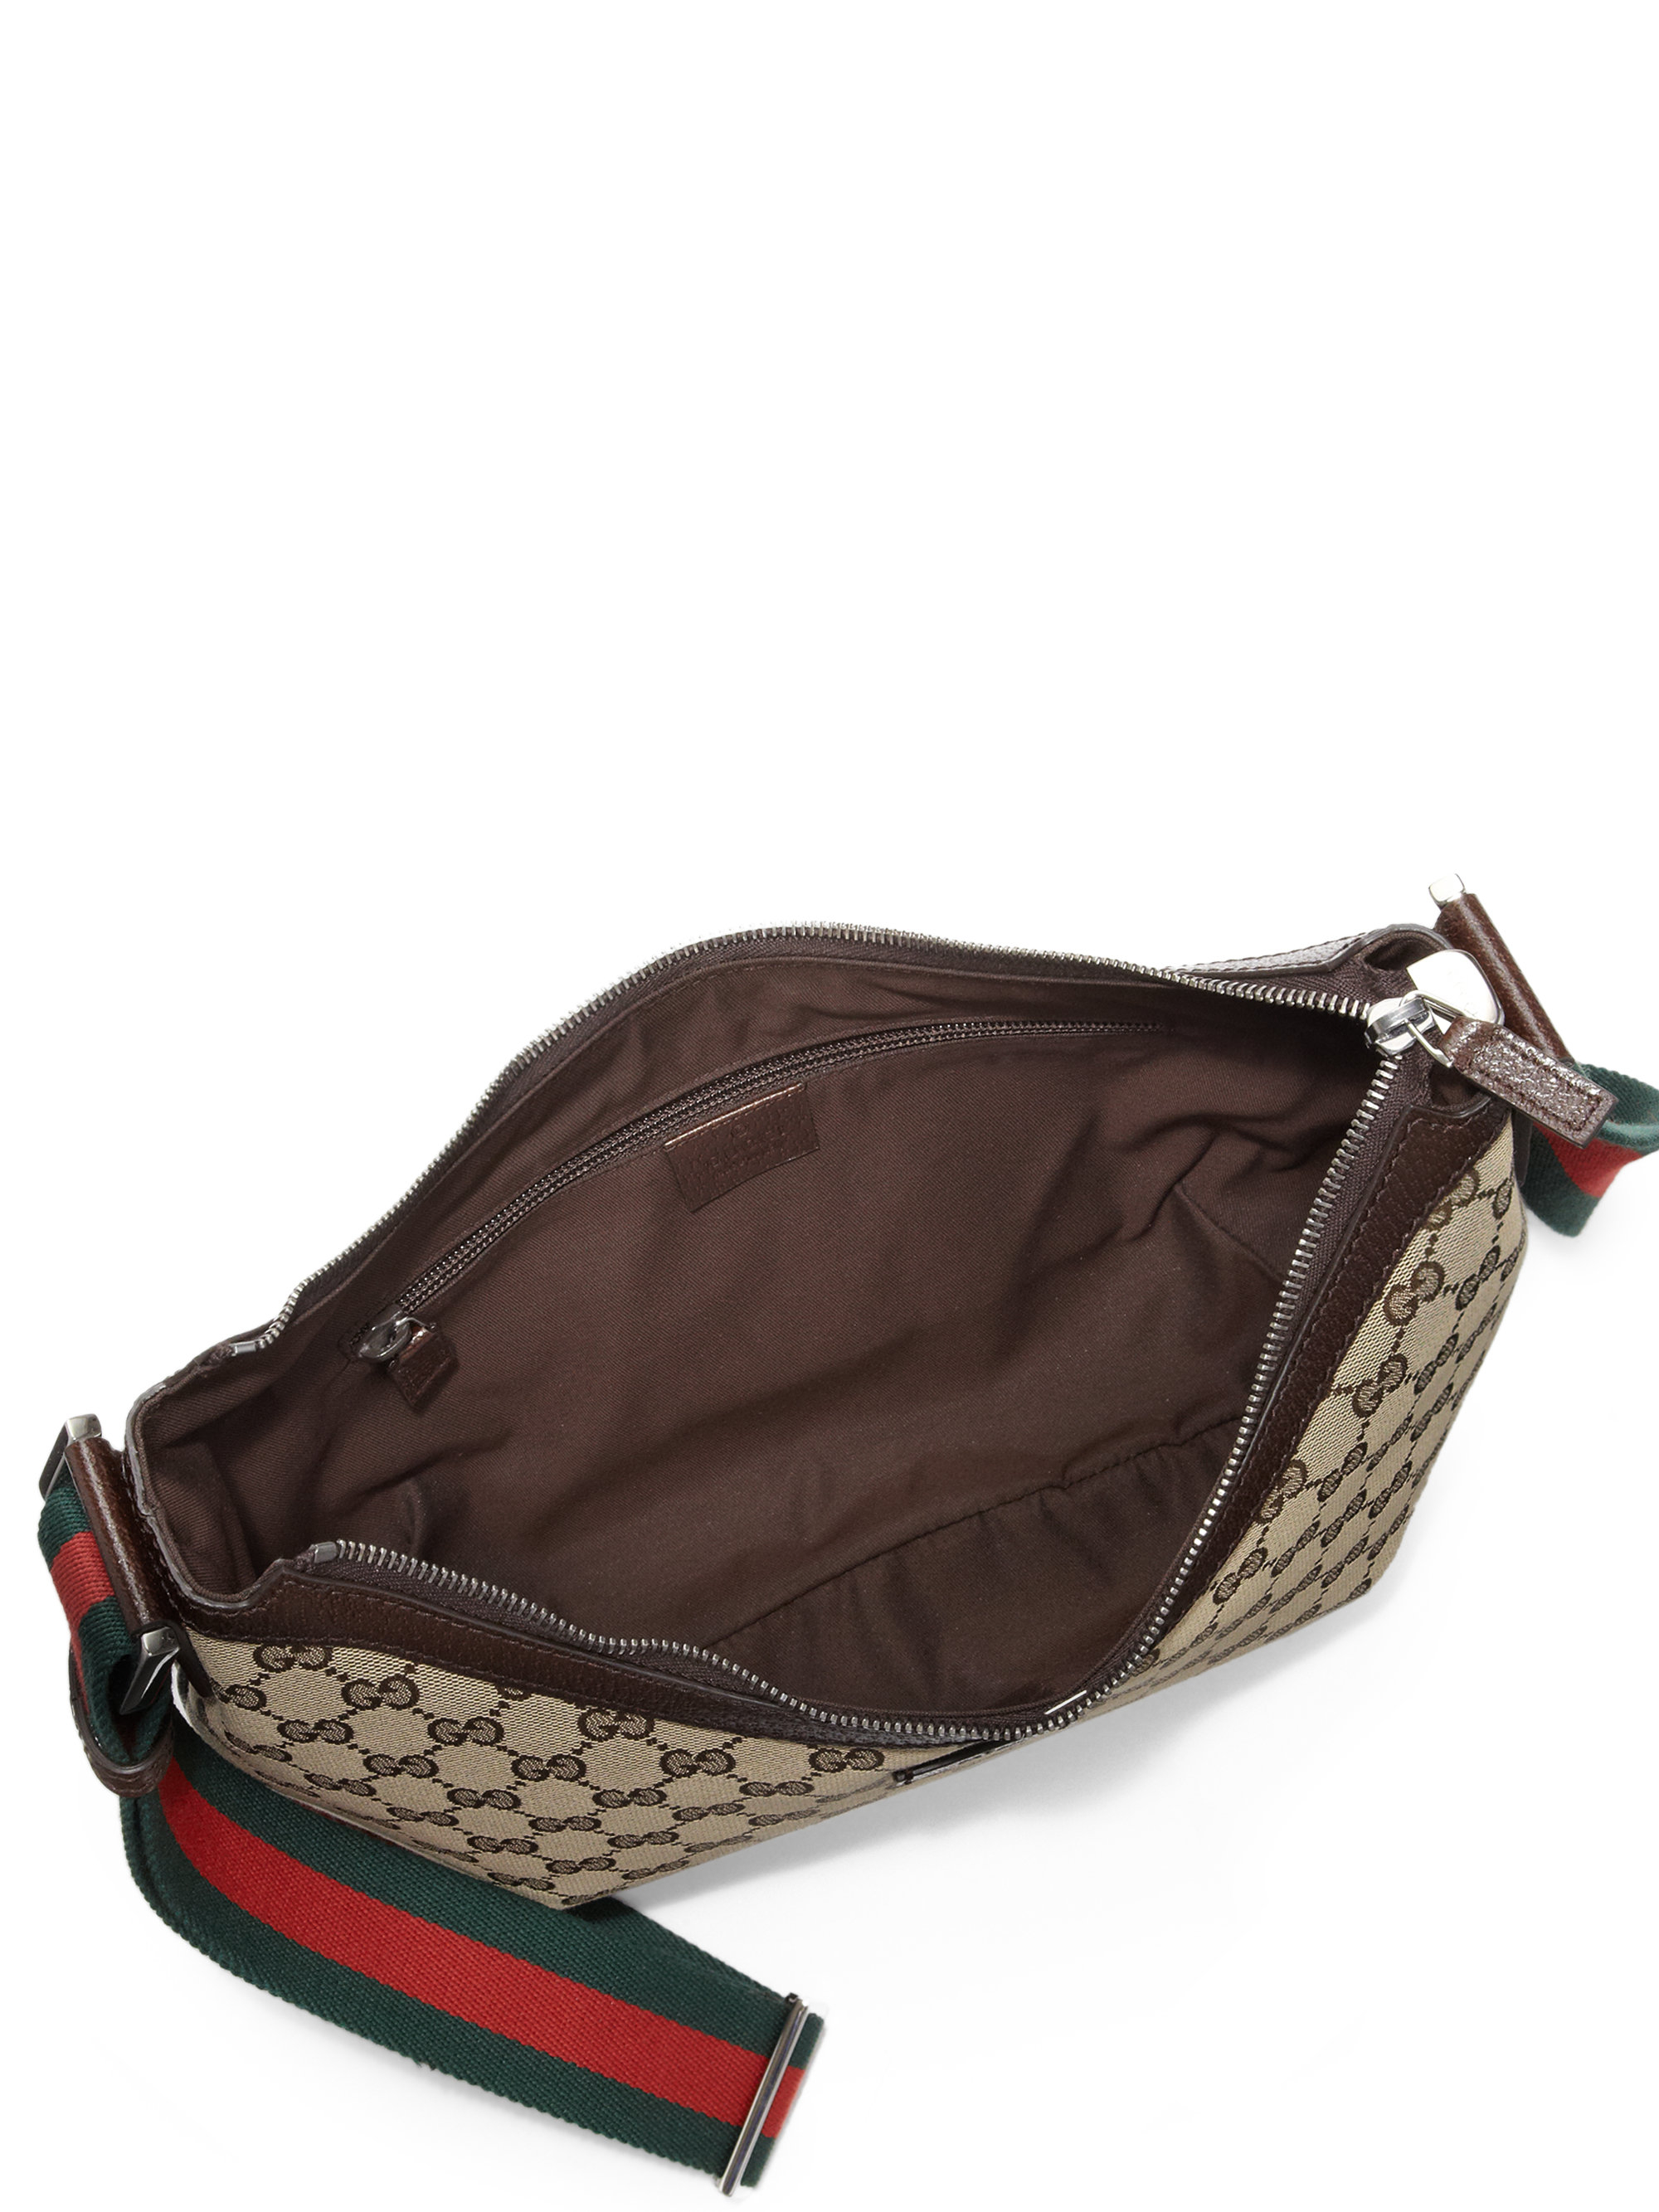 Lyst - Gucci Original Gg Canvas Messenger Bag in Brown